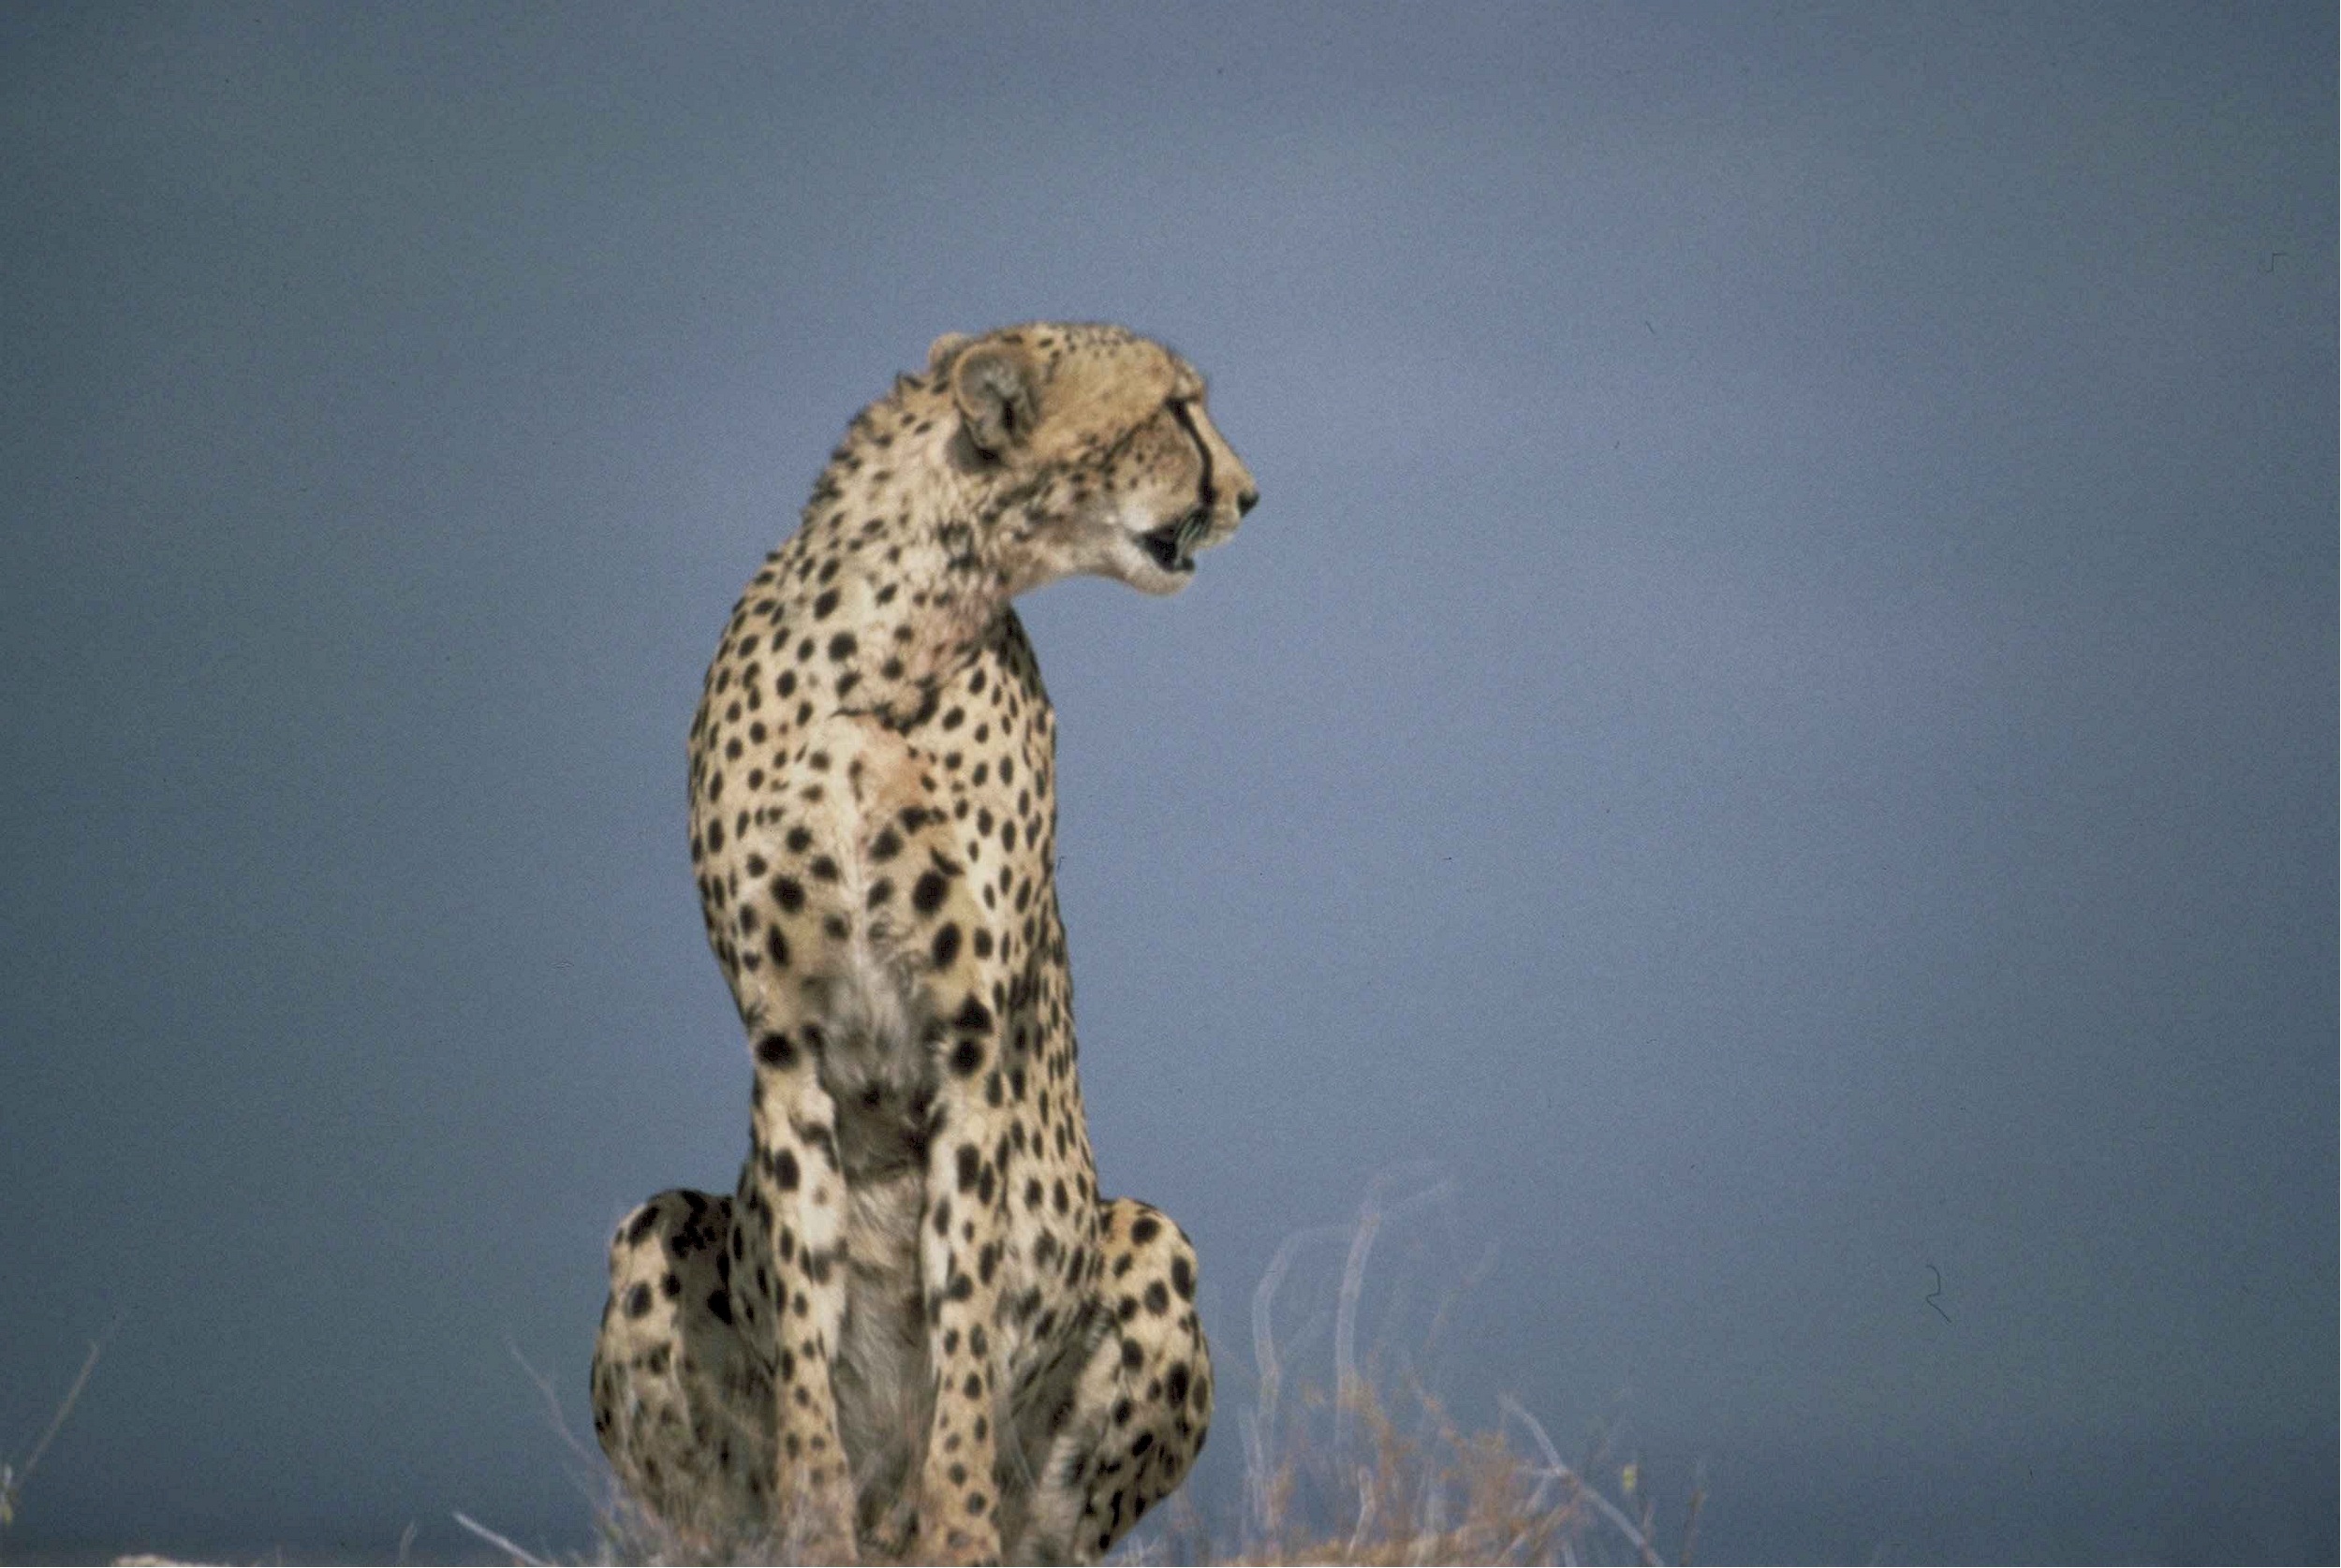 Cheetah photo